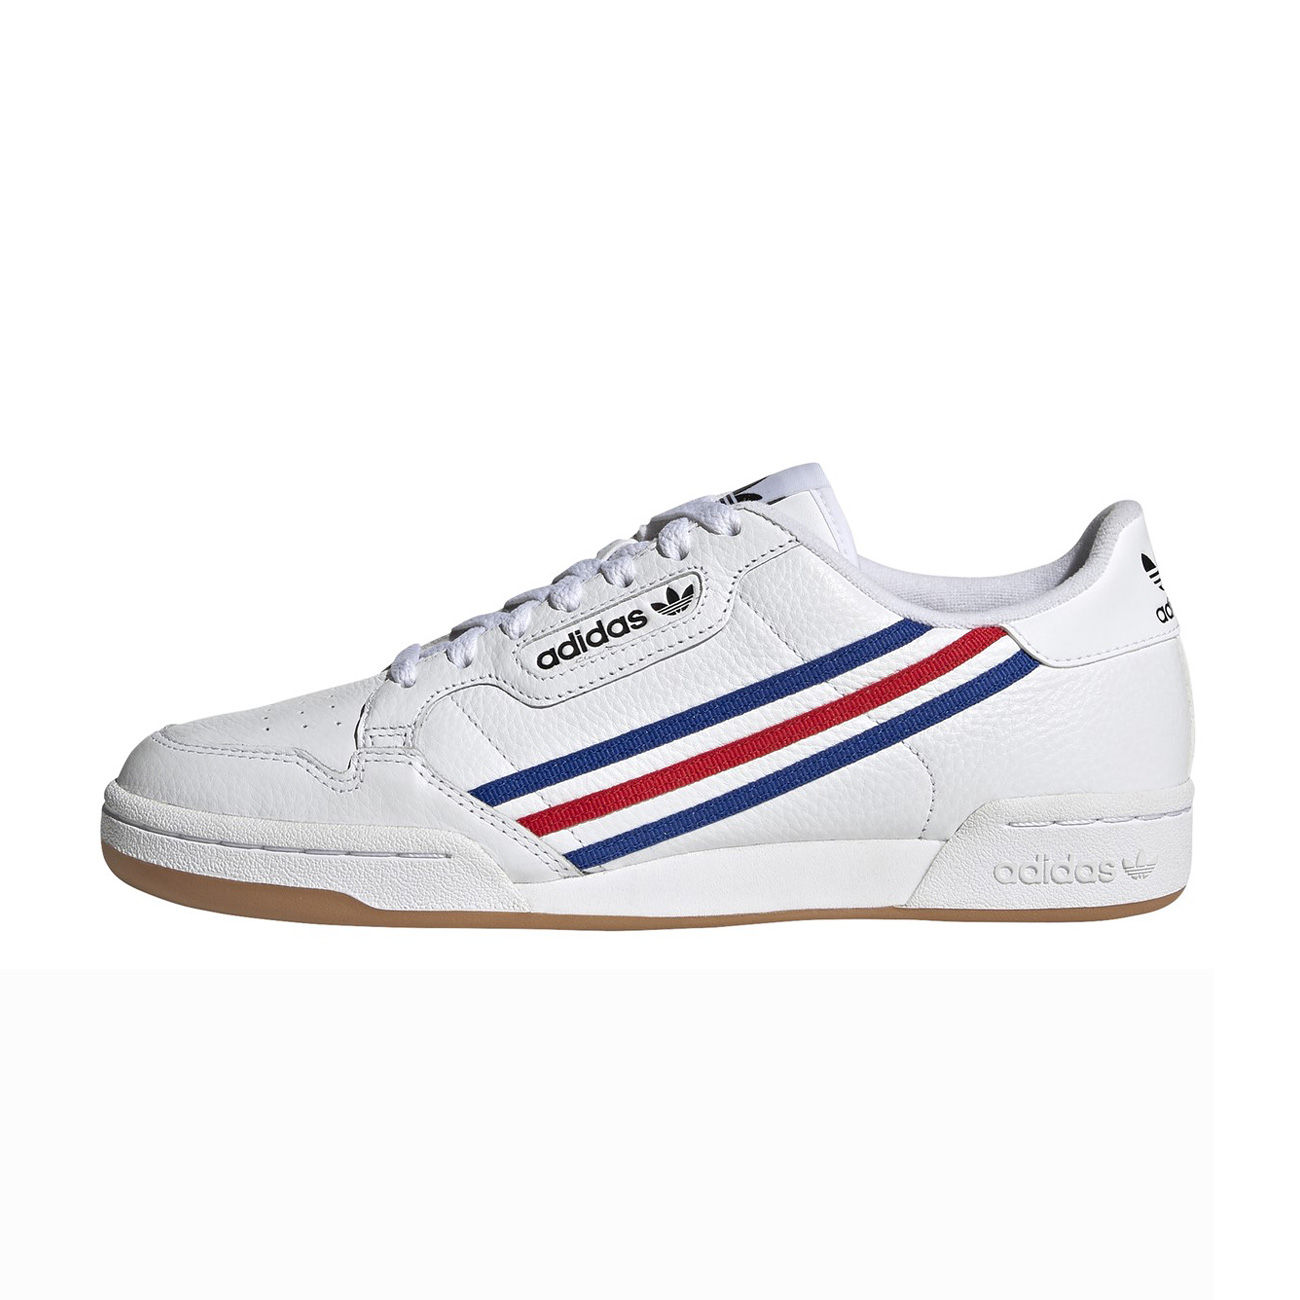 adidas - Adidas Roguera Men's White Sneakers EG2658 - AliExpress